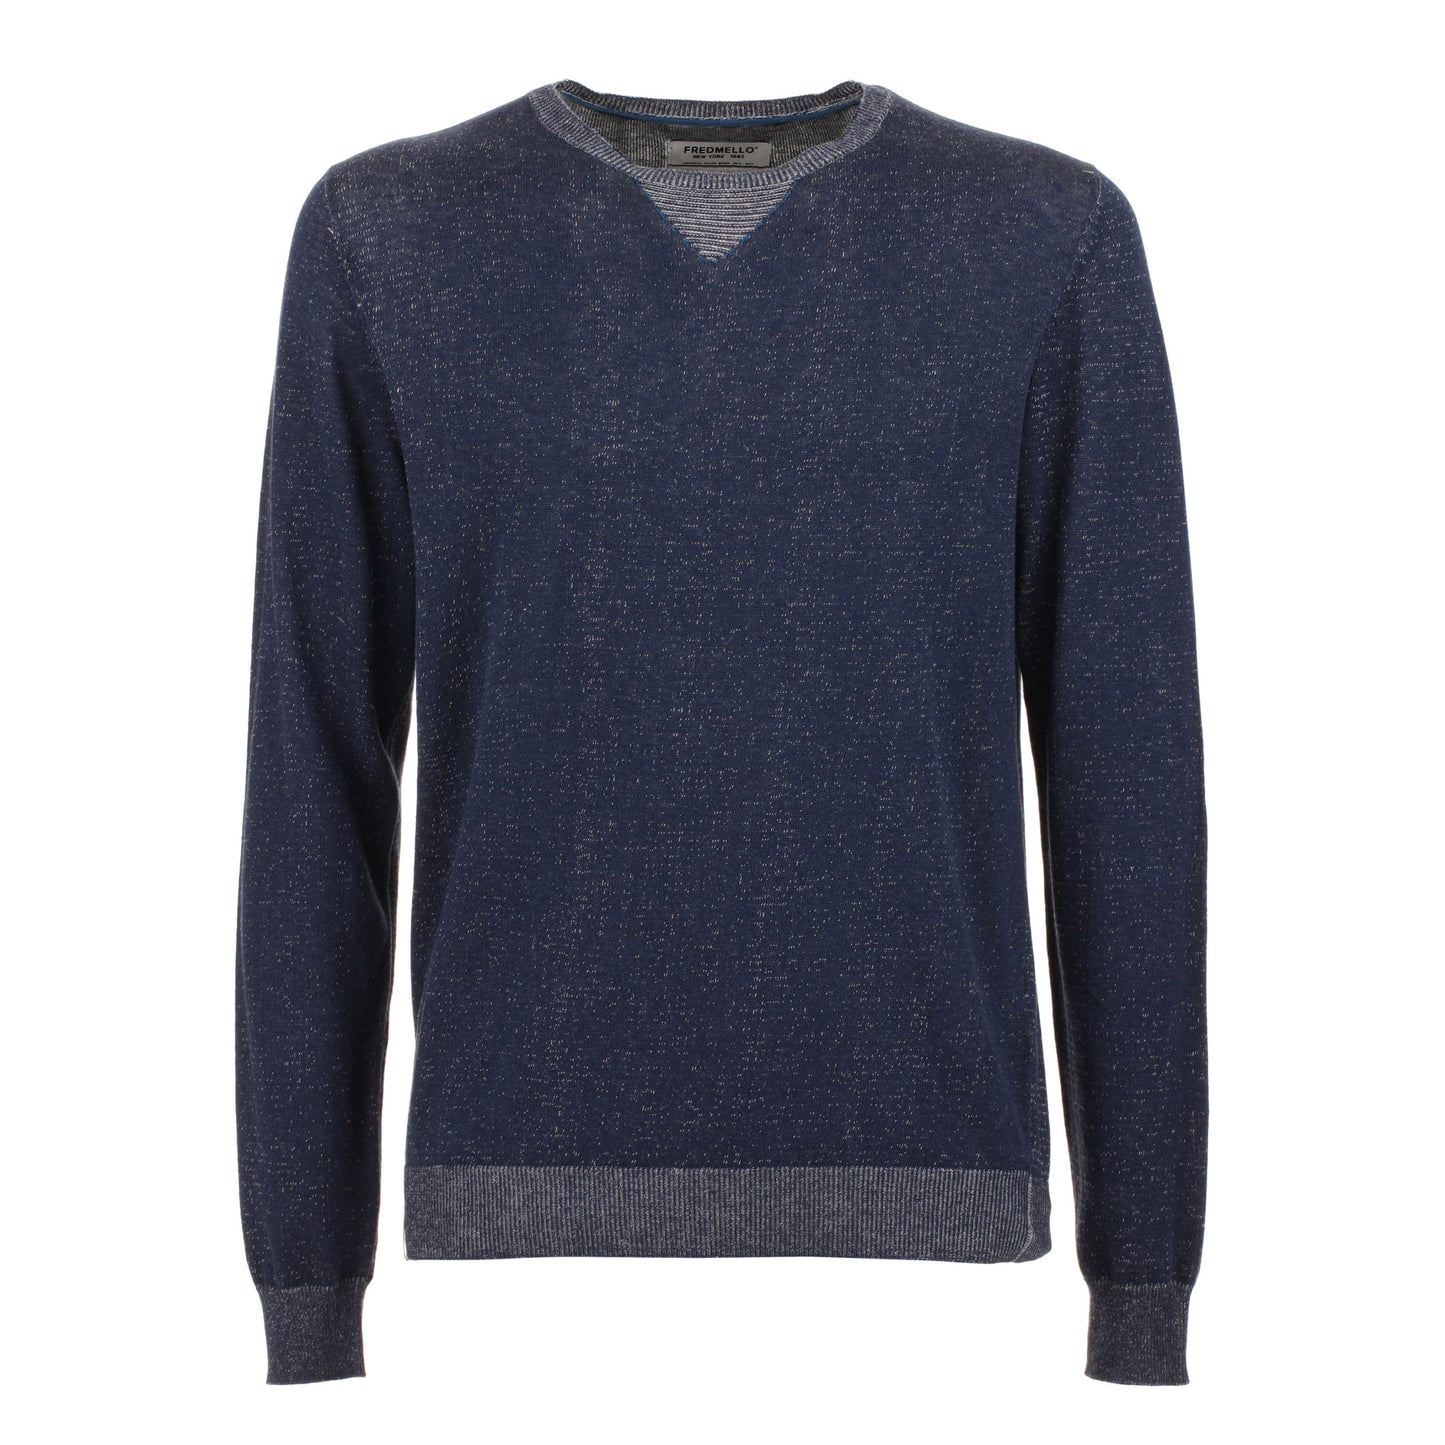 Blue Cotton Sweater